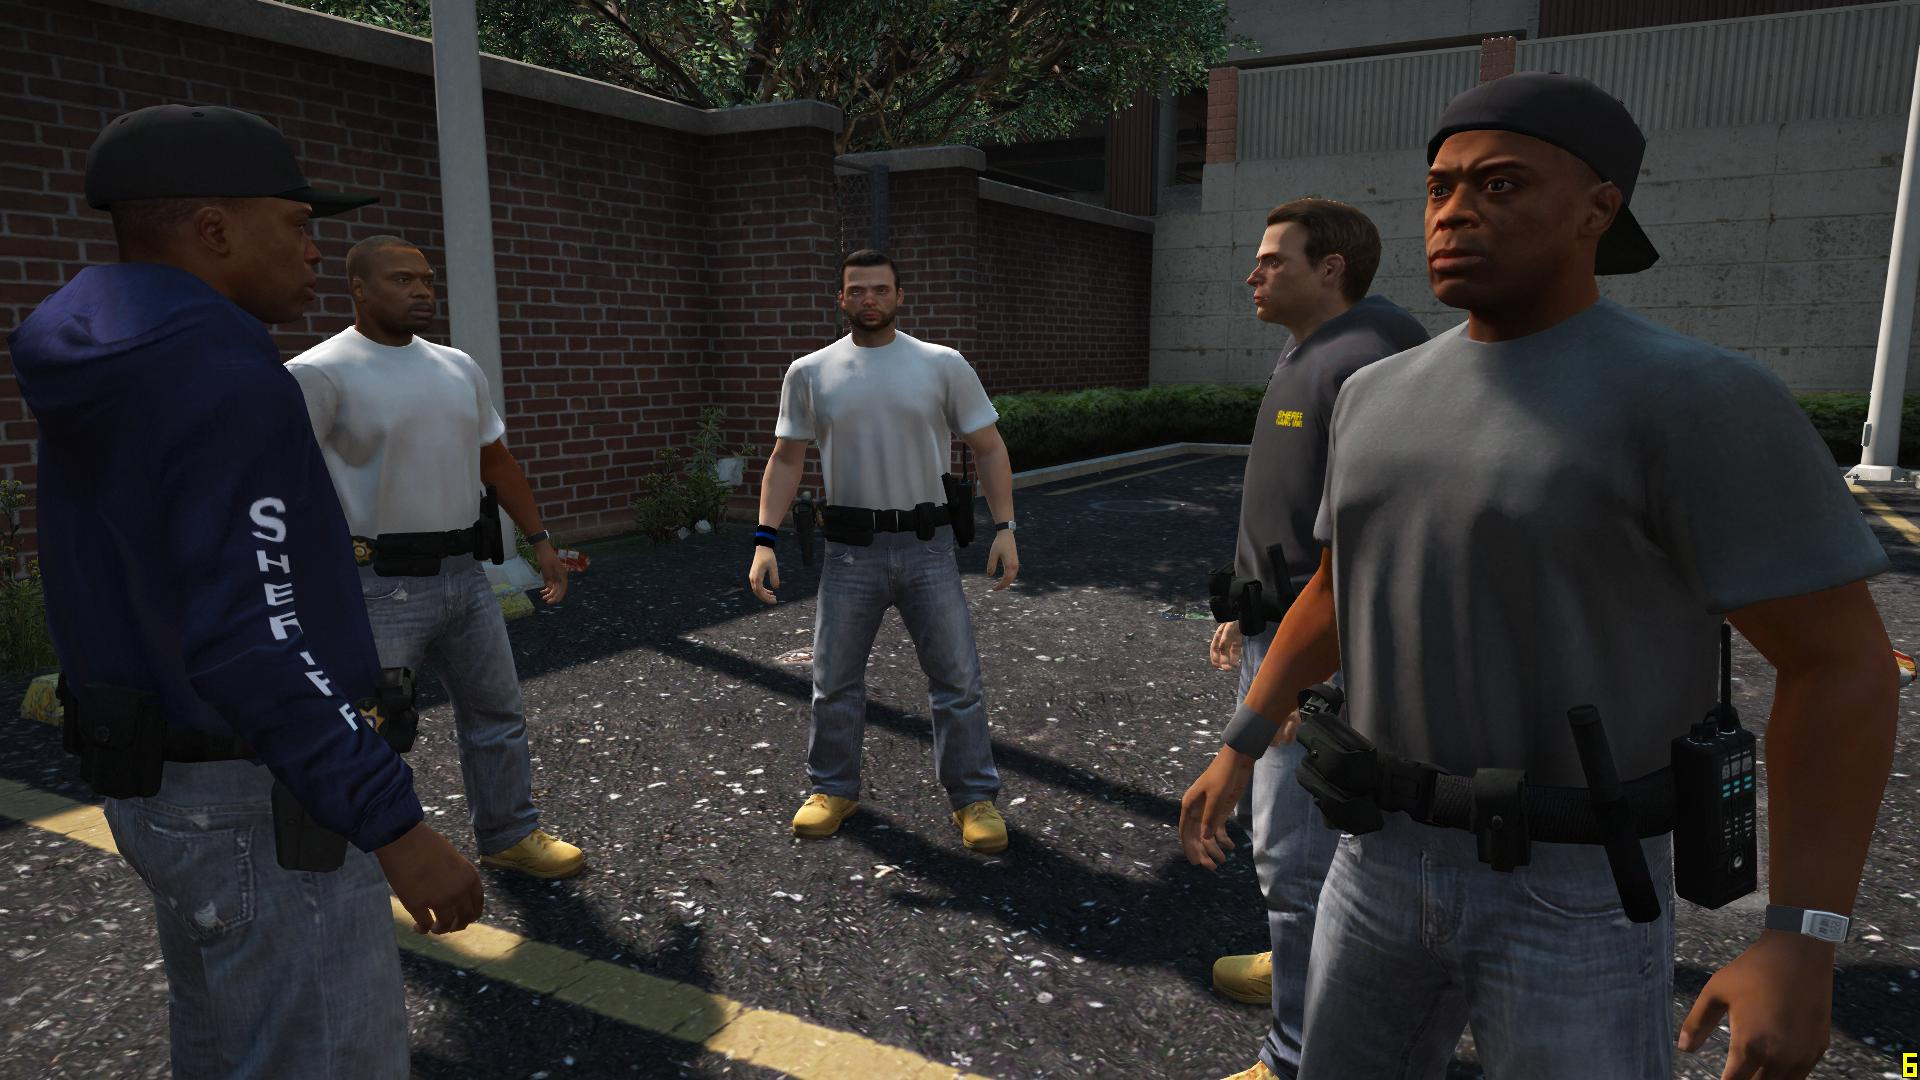 Lasd gang Unit. Los Angeles Sheriff Department gangs. Gang Unit. Jump out boys lasd.